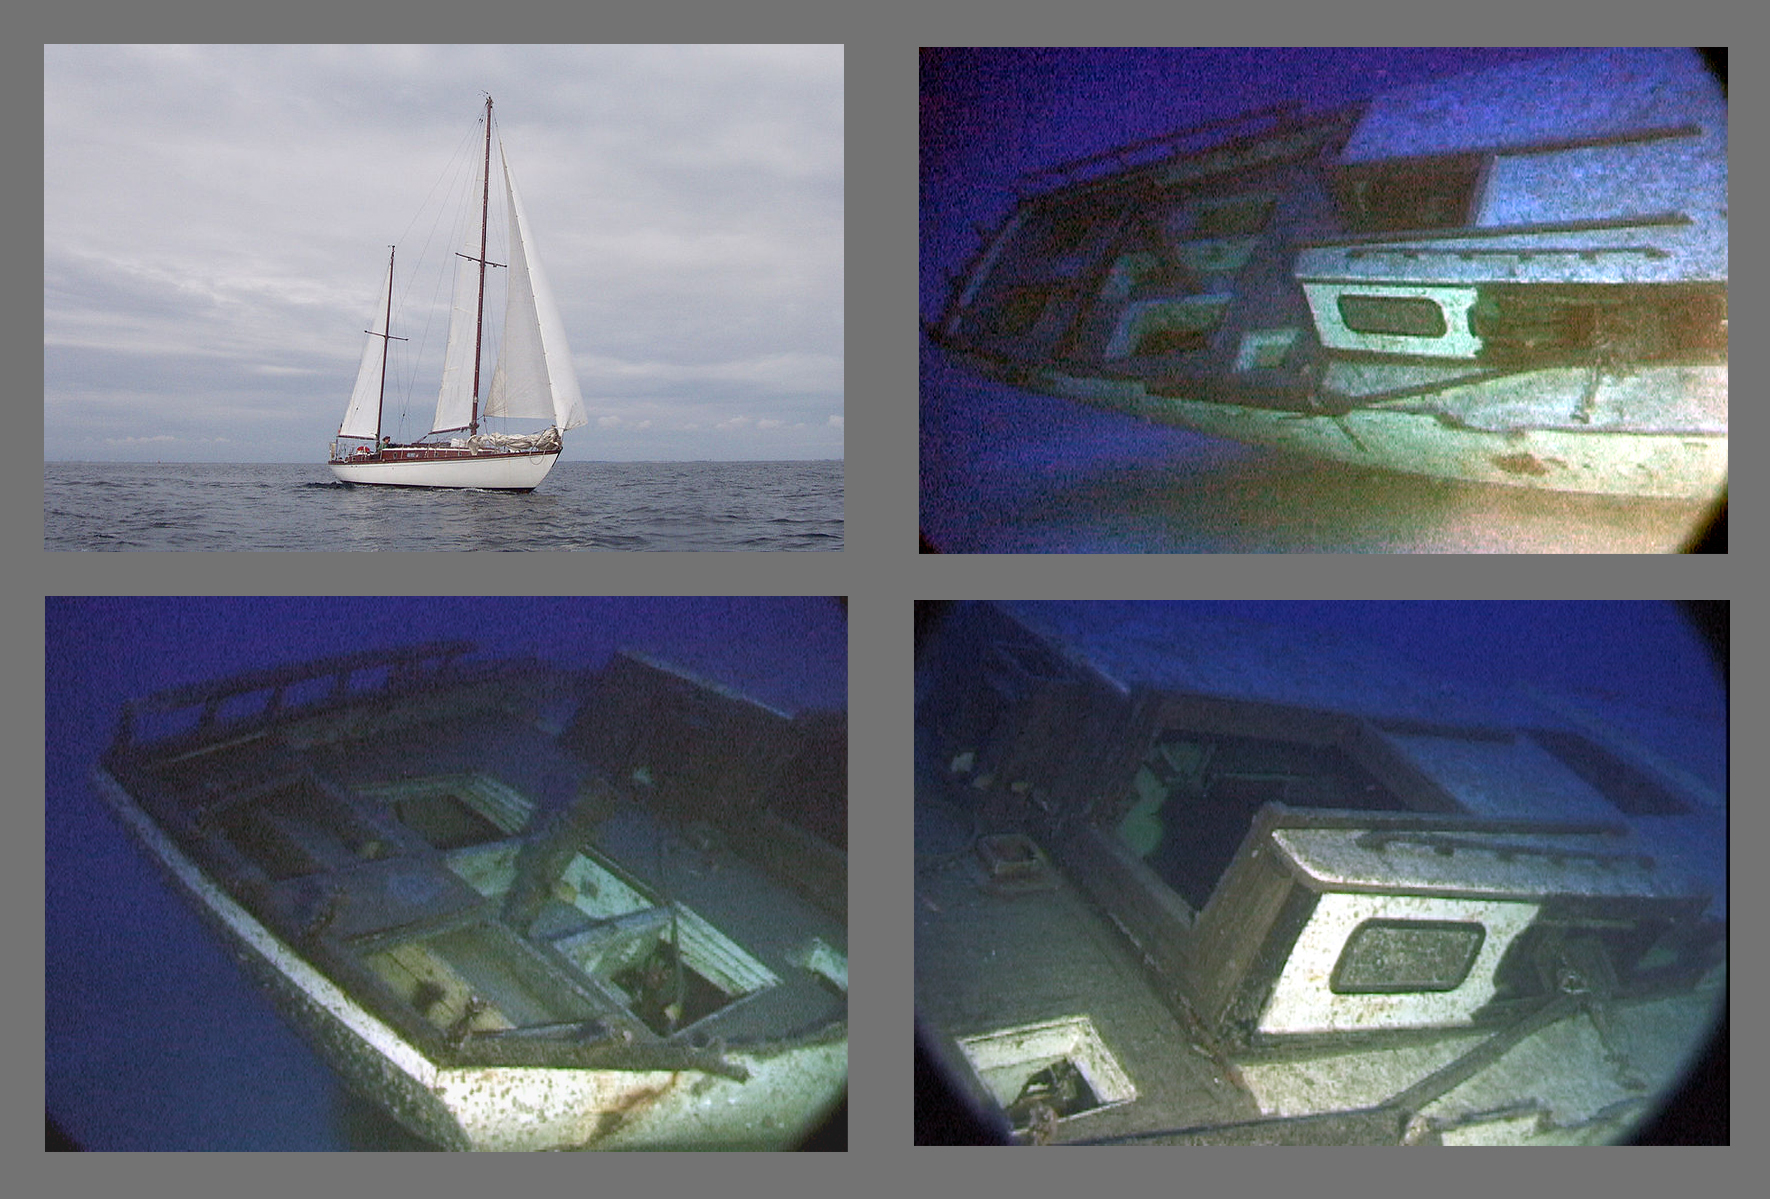 Composite: Ketch sailboat